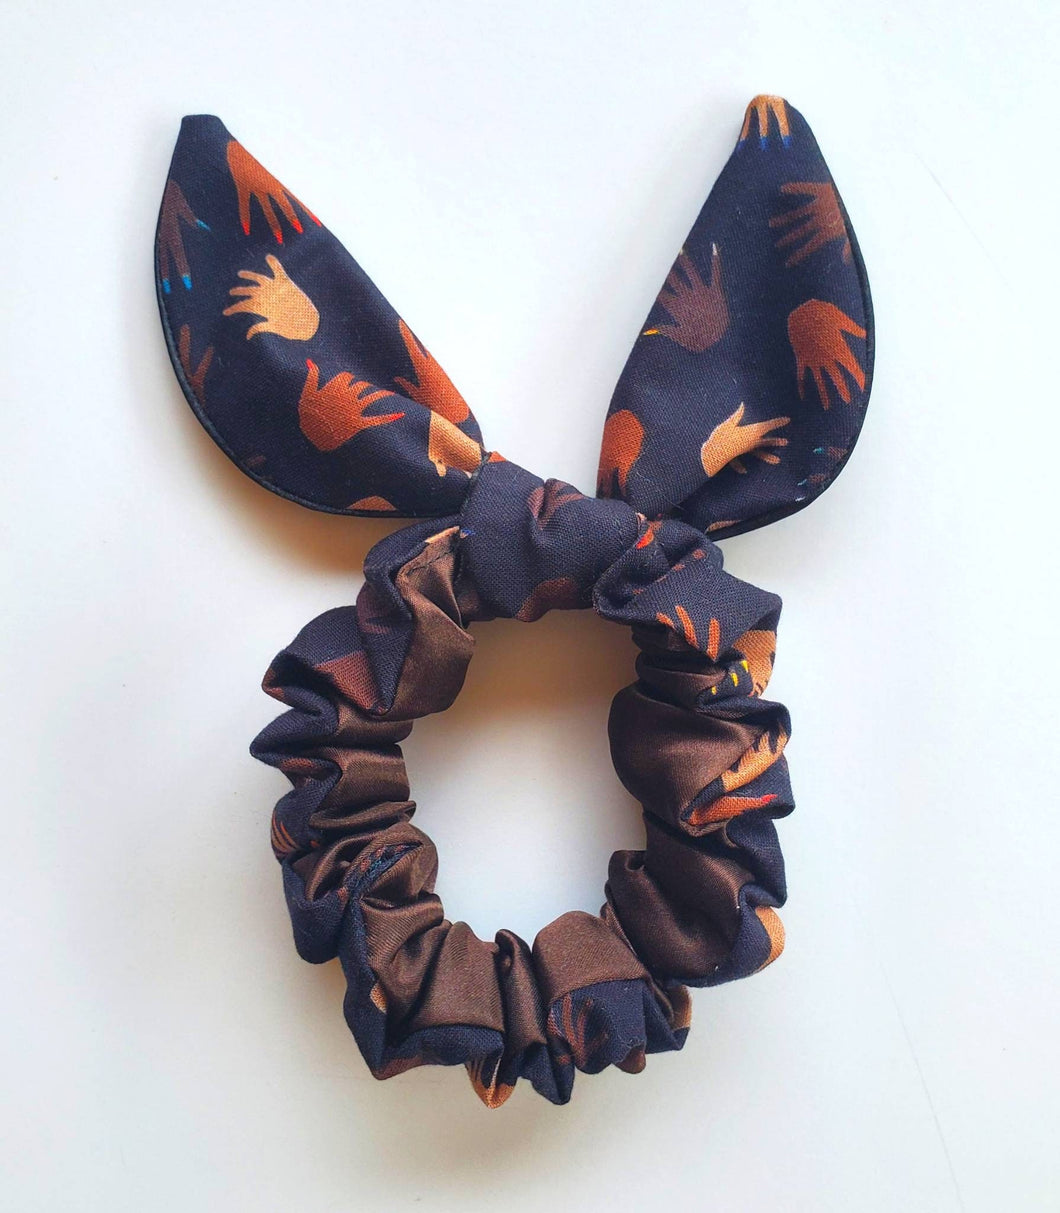 Cotton + Satin Bunny ears Scrunchies| Satin Hair Scrunchies| Gifts for Women & Girls